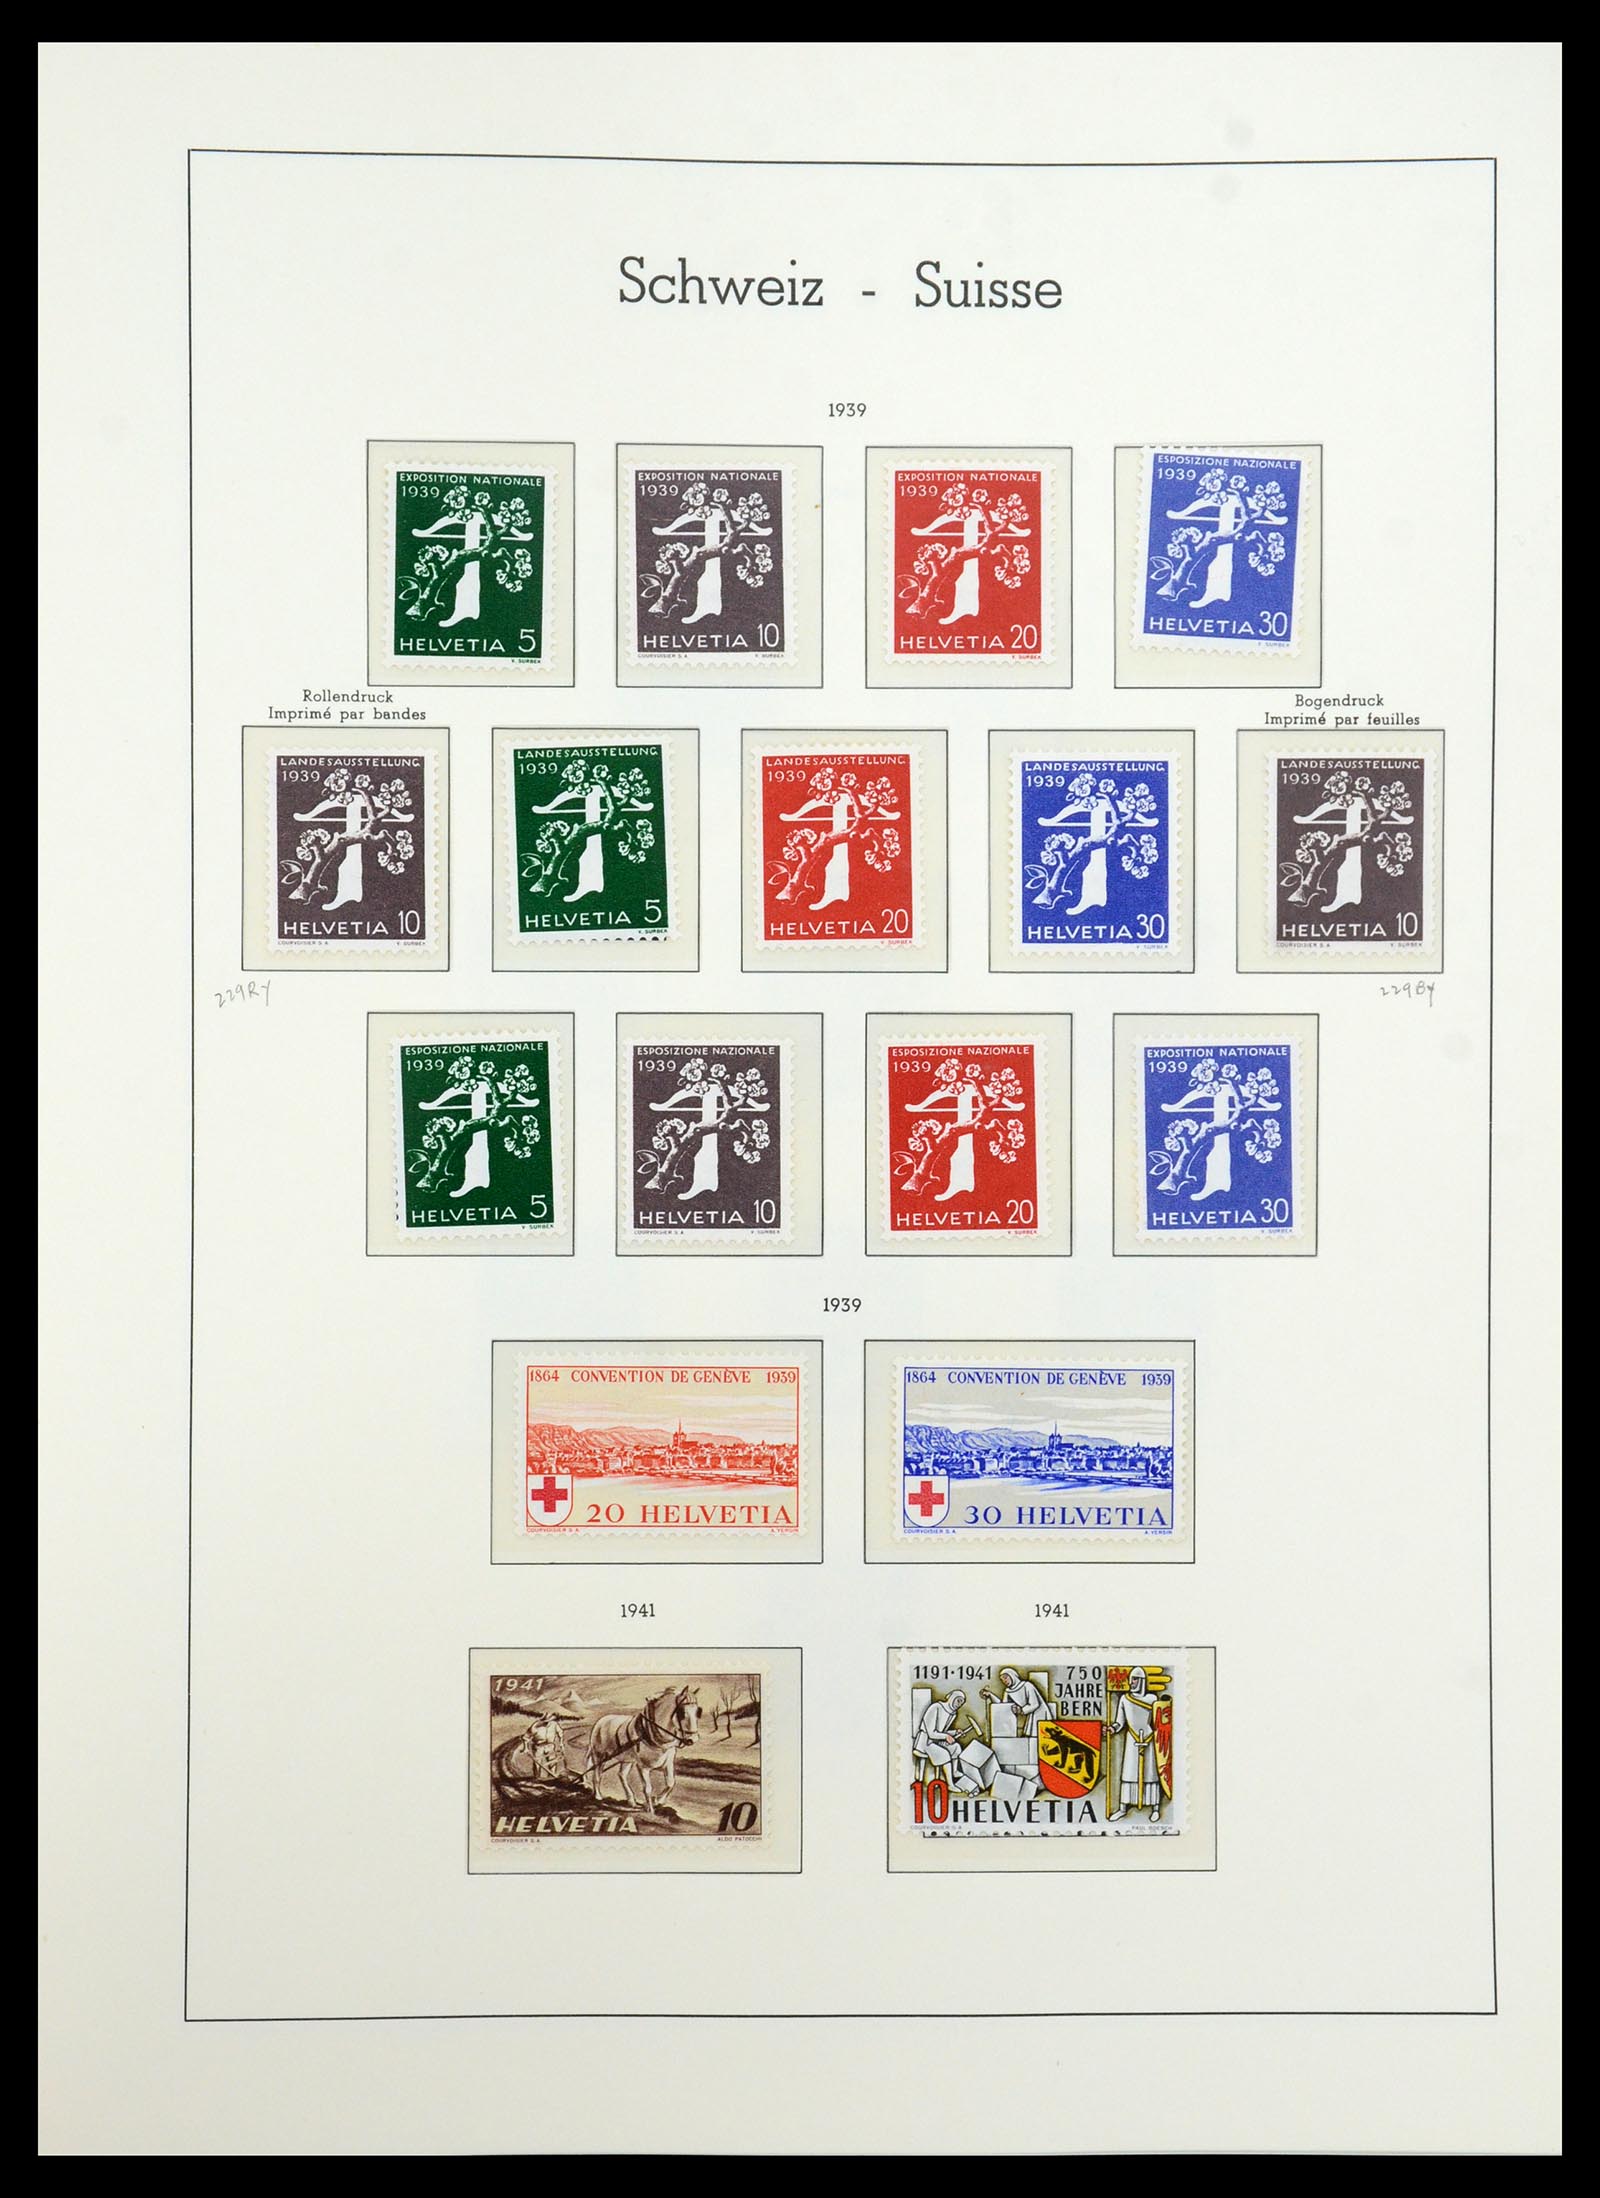 36284 024 - Stamp collection 36284 Switzerland 1854-2006.